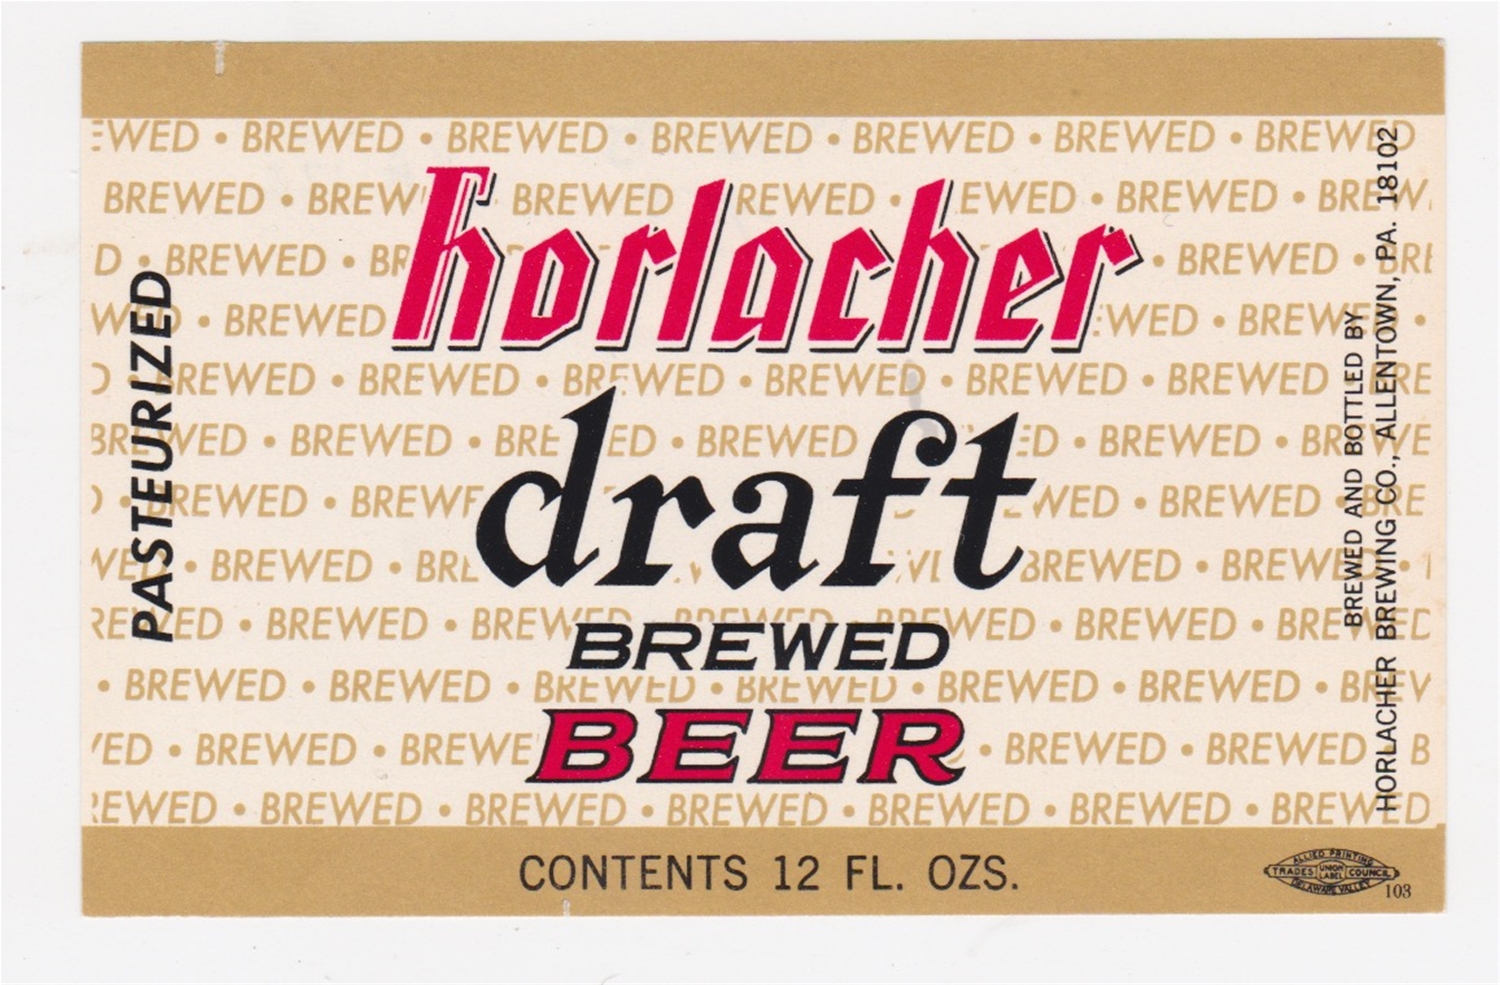 Horlacher Drafter Brewed Beer Label